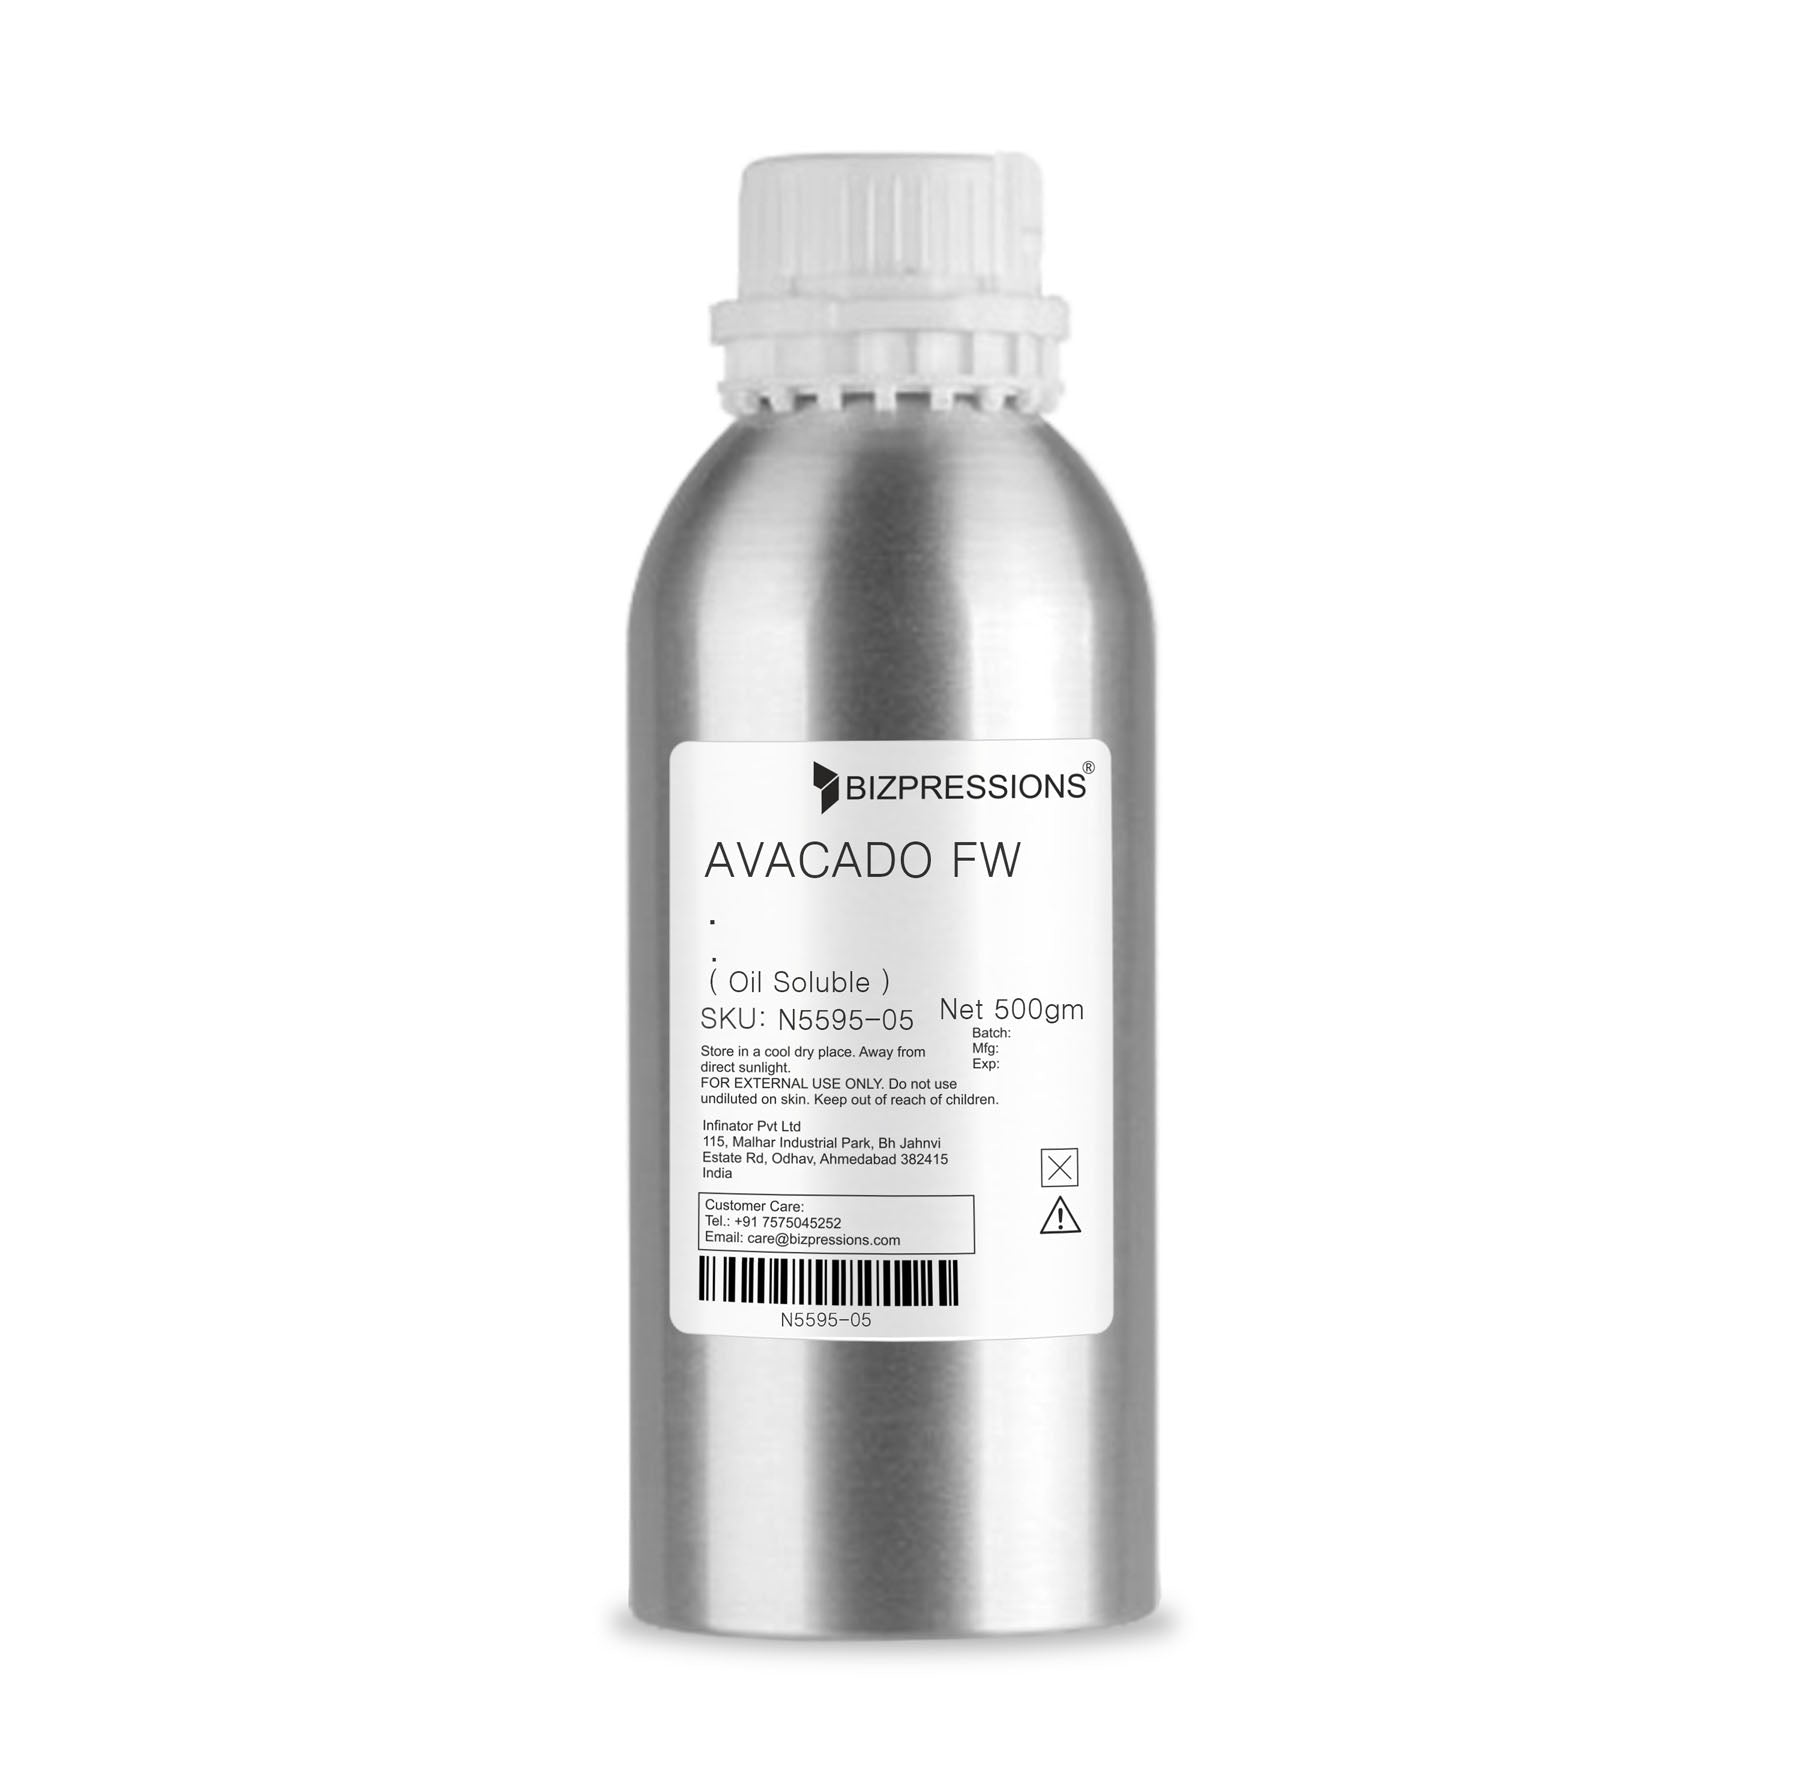 AVACADO FW - Fragrance ( Oil Soluble ) - 500 gm